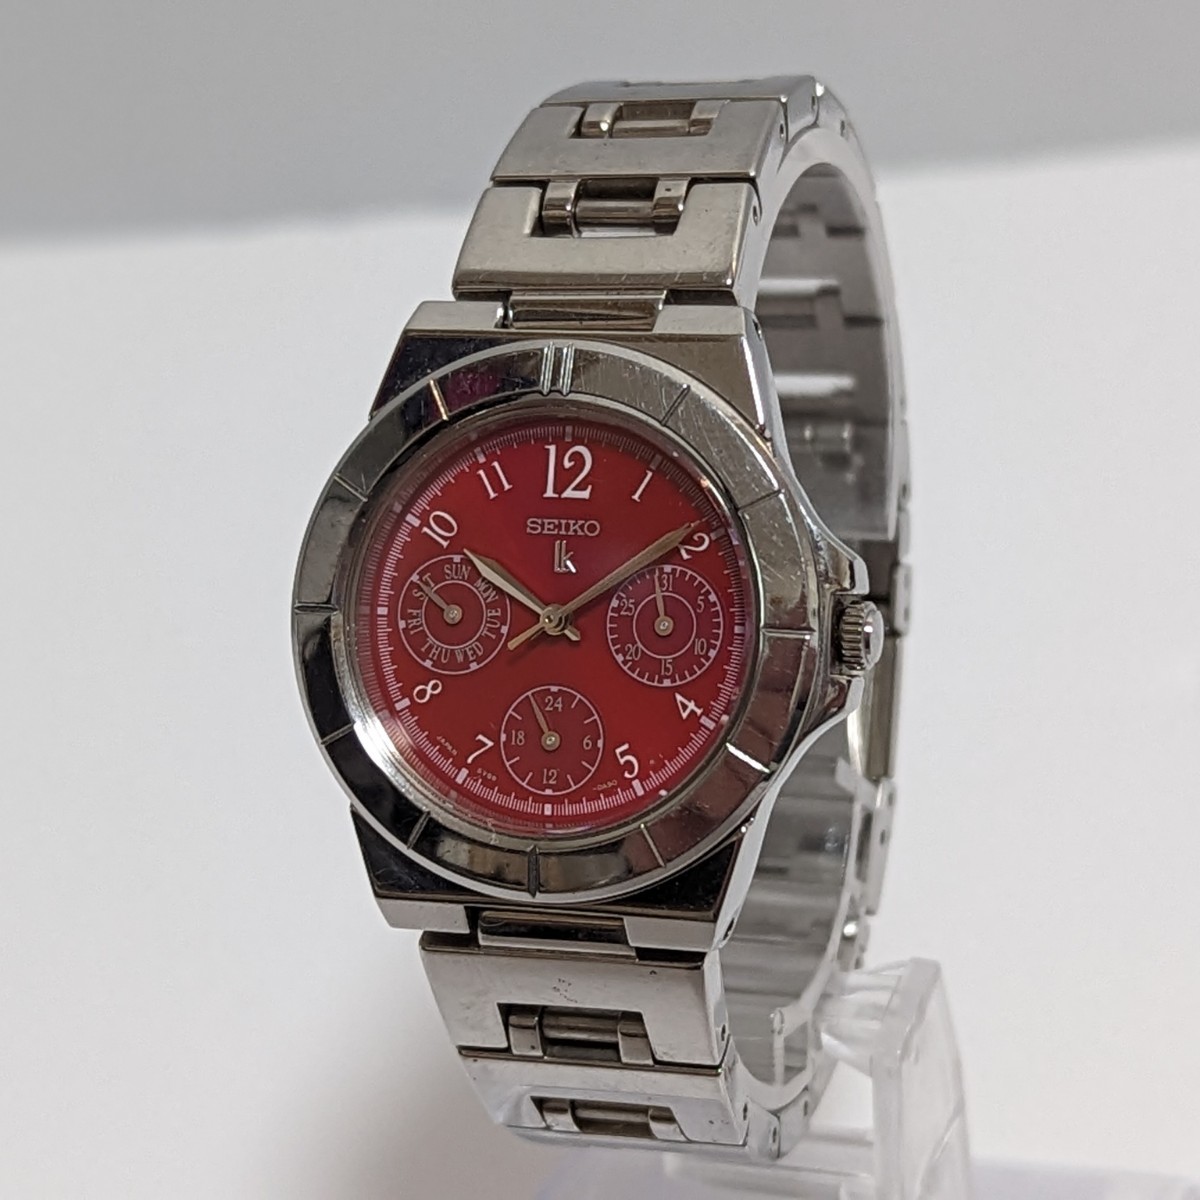 SEIKO セイコー LUKIAルキア 5Y89-0830 トリプルカレンダー 赤文字盤 QUARTZ クォーツ シルバー レディース 3針 腕時計 中古 D81_画像1